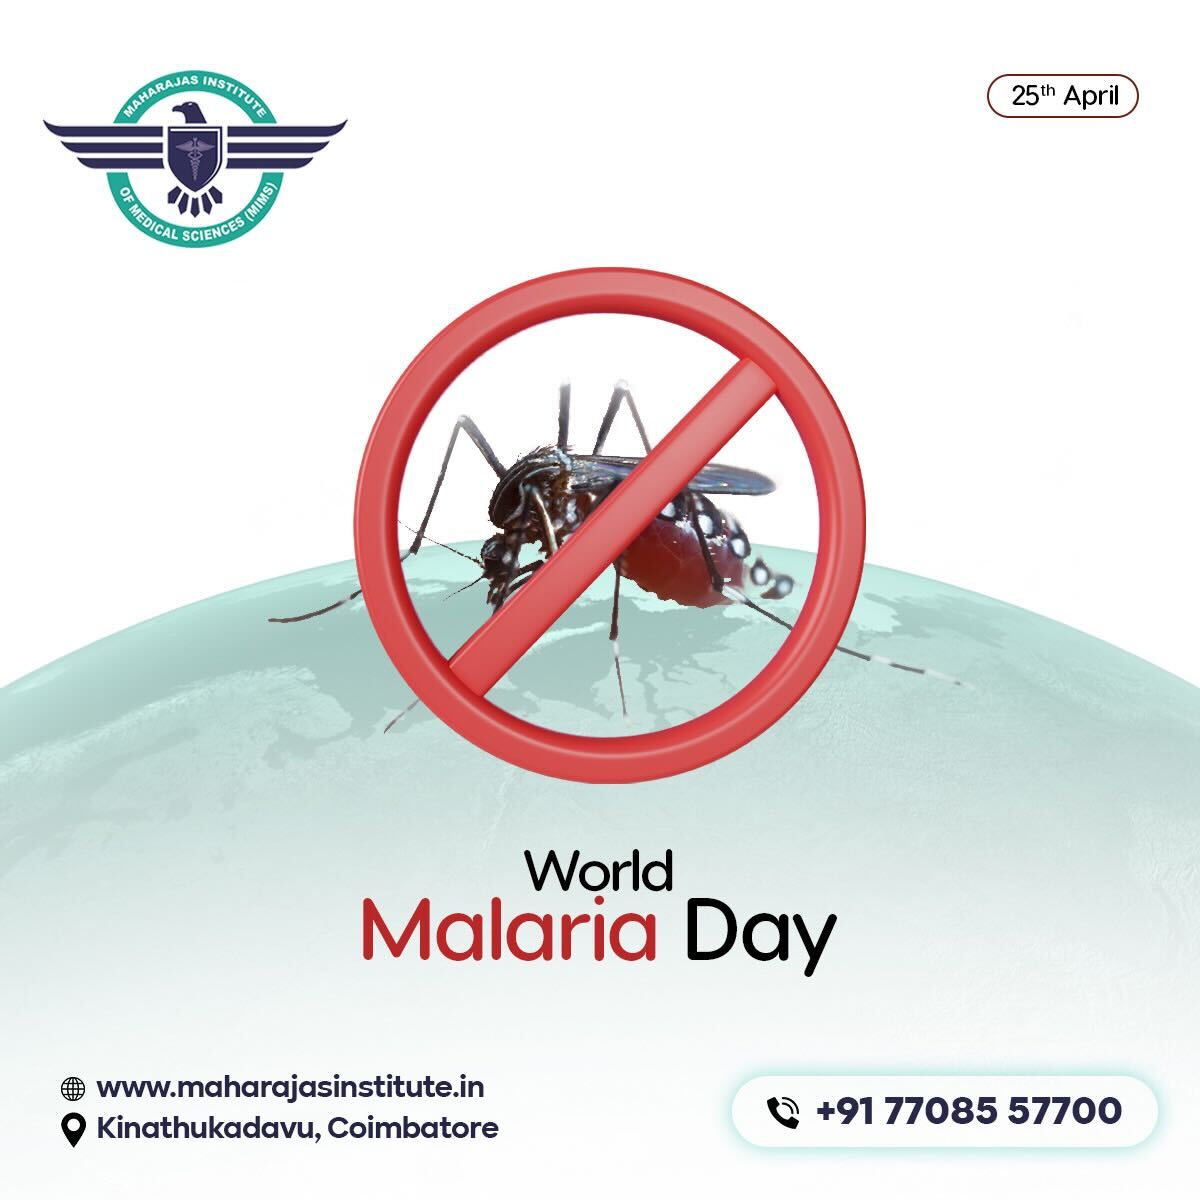 Bite Back Against Malaria This World Malaria Day

#malariaday #april25 #maharajainstitute